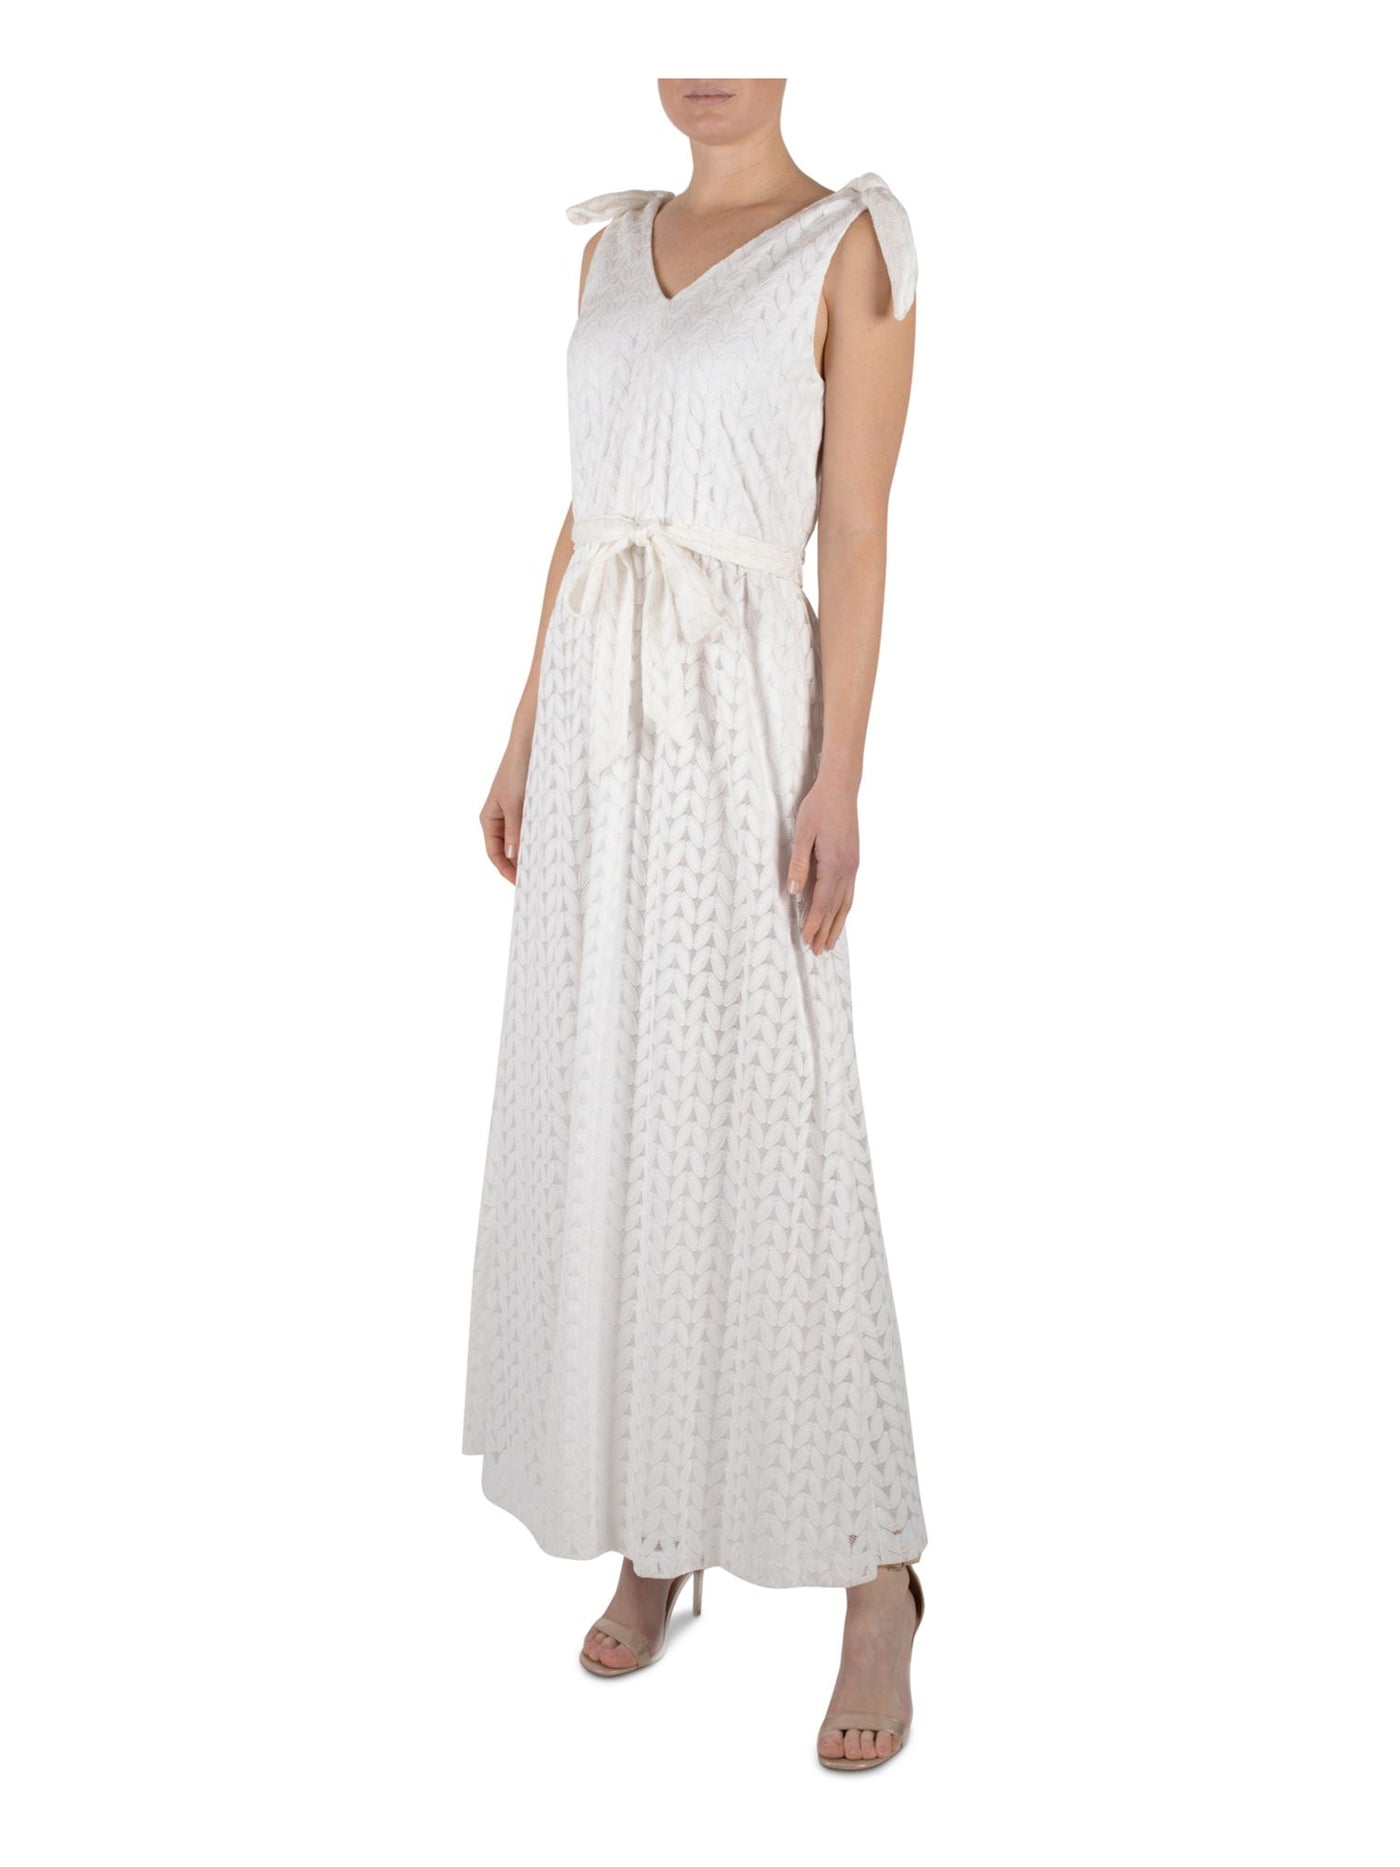 DONNA RICCO NEW YORK Womens White Tie V Neck Maxi Formal Fit + Flare Dress 6